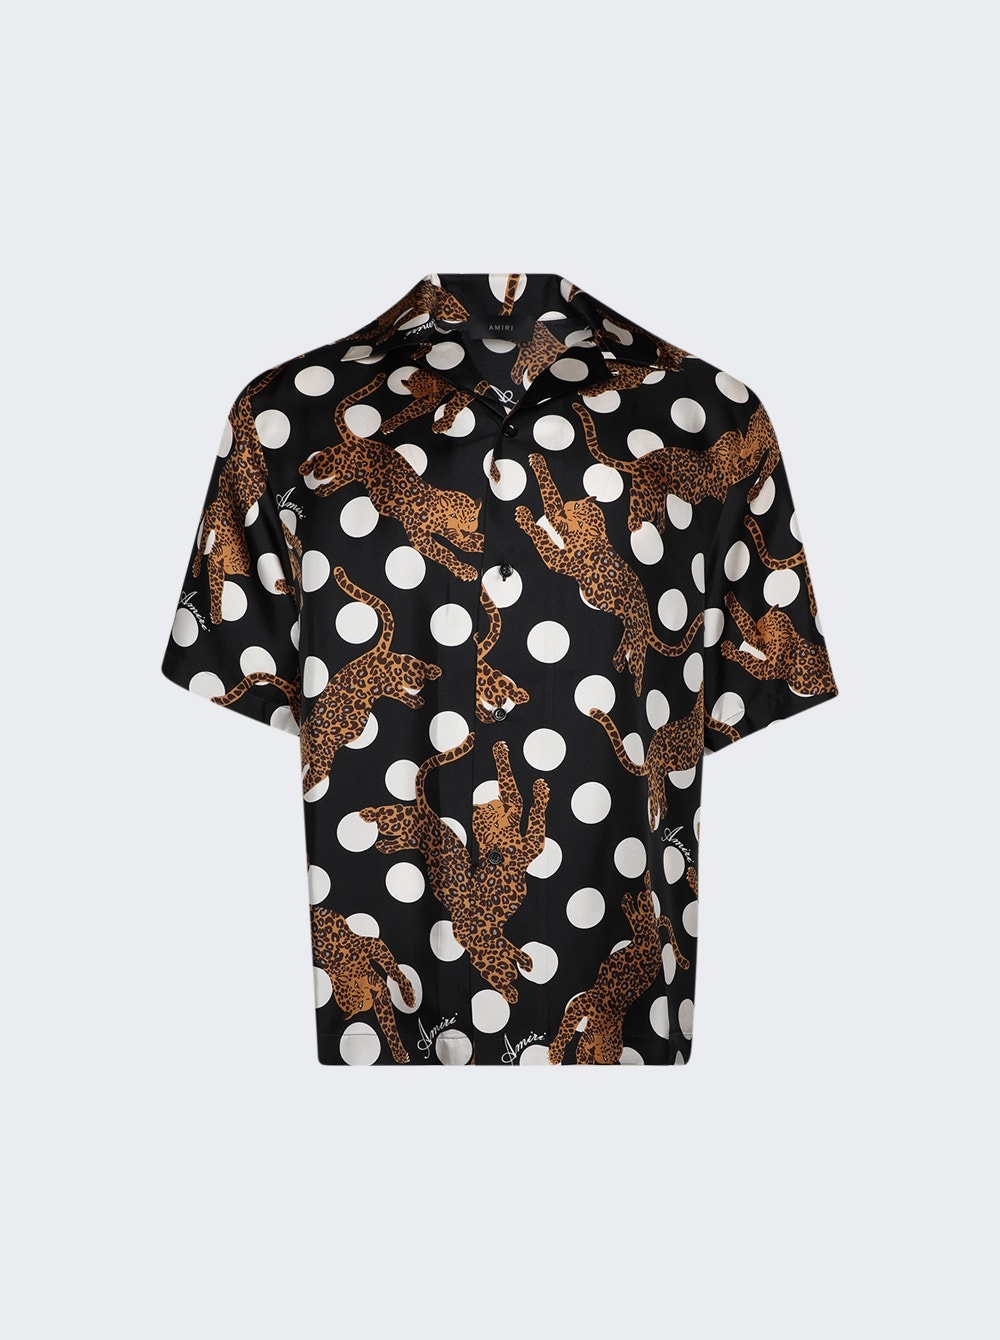 Leopard Polka Dot Bowling Shirt Black - 1